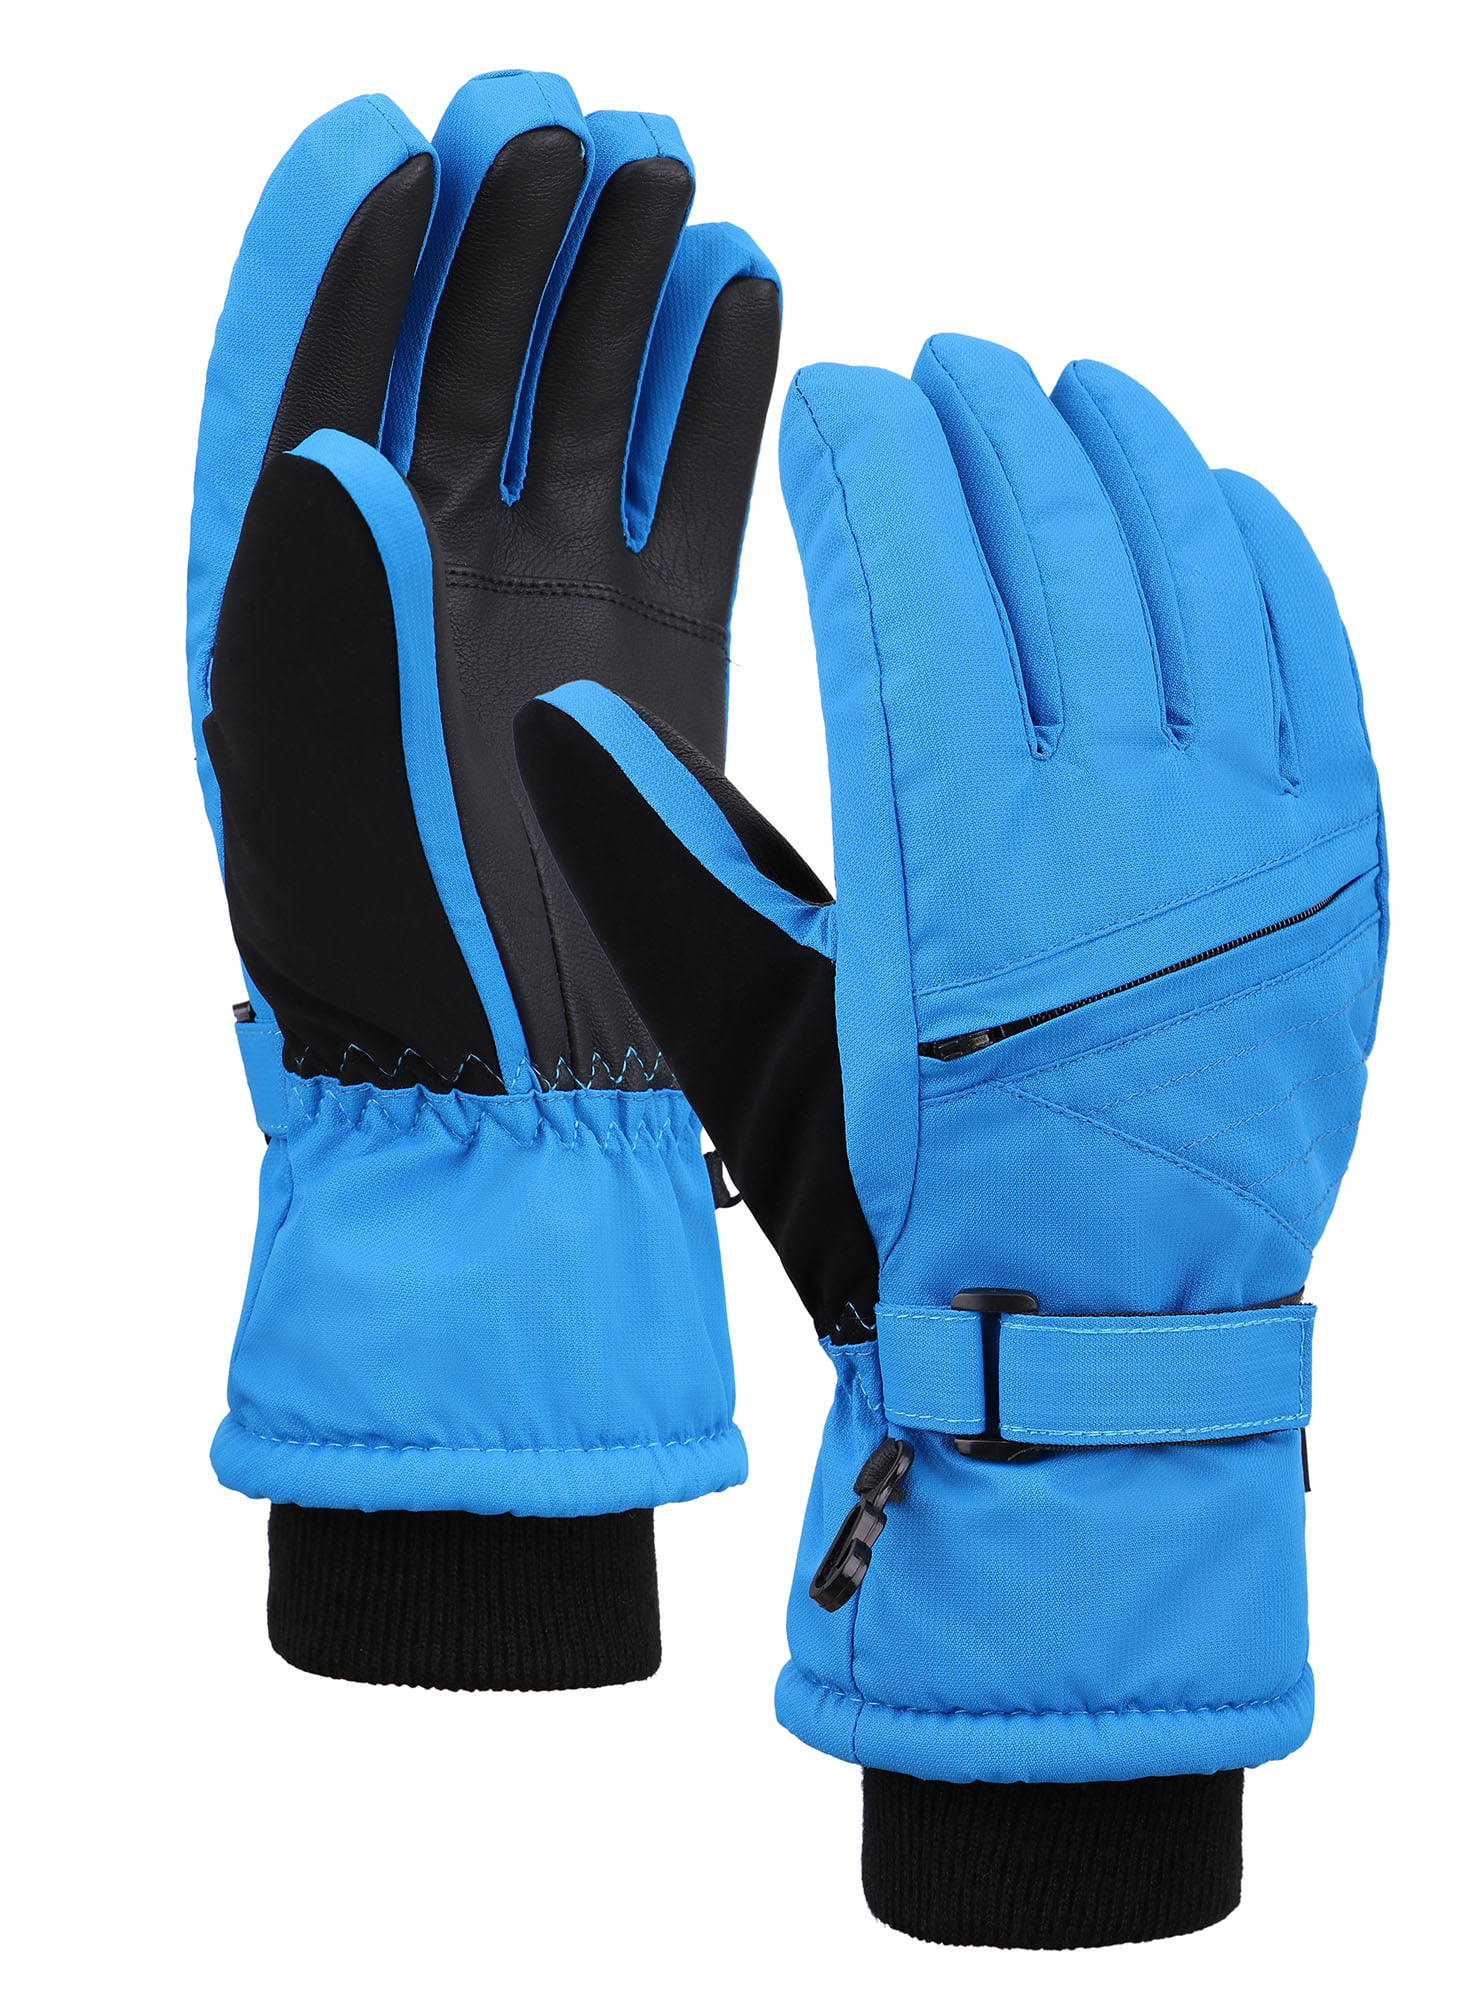 Andorra Kids Thinsulate Lined Ski Mittens Boys Girls Snow Mittens Winter Gloves